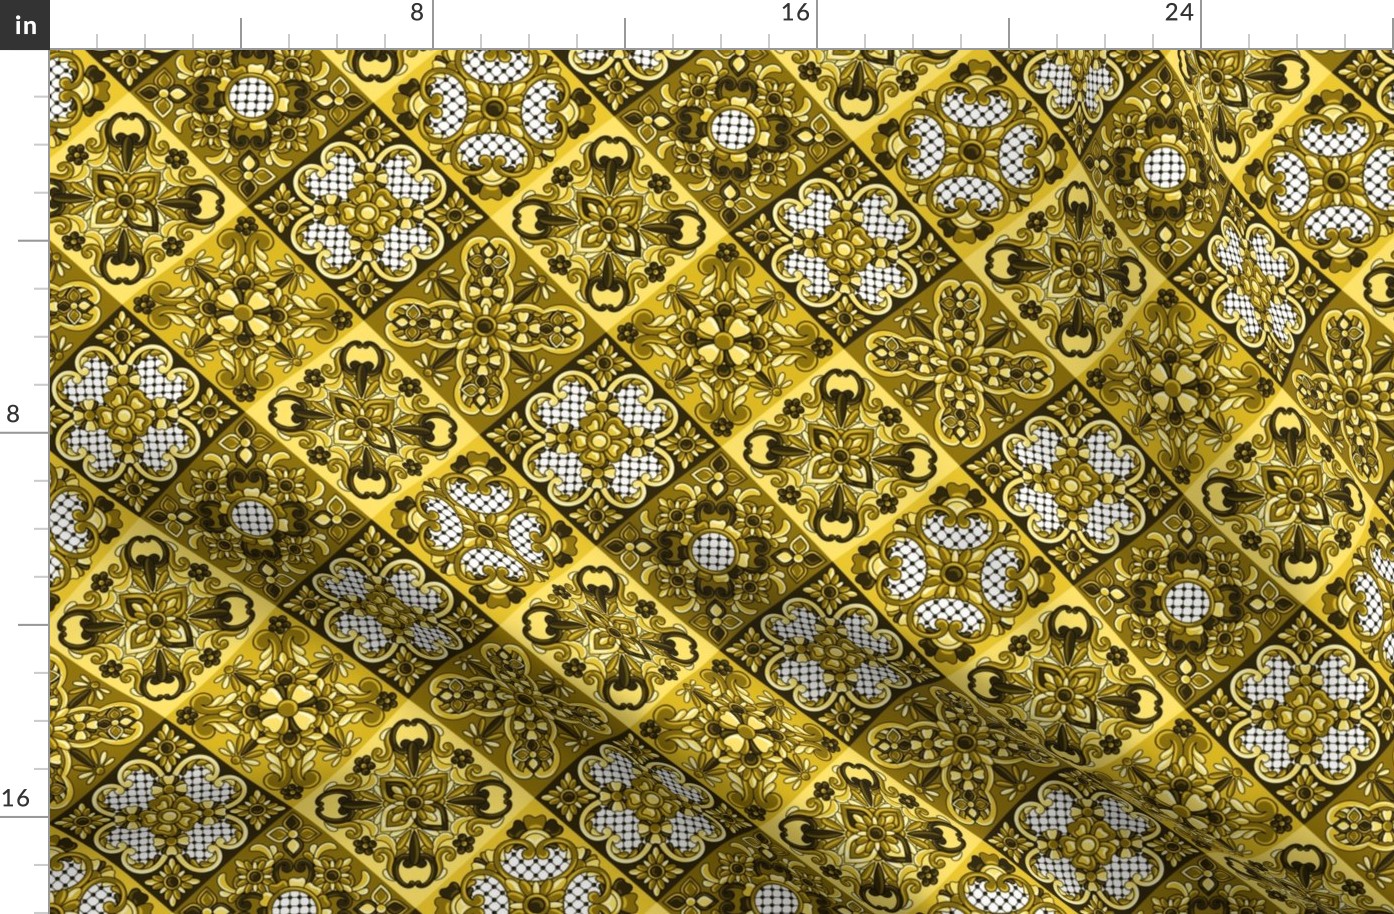 Varied Diagonal Talavera Tiles in Saffron Yellow